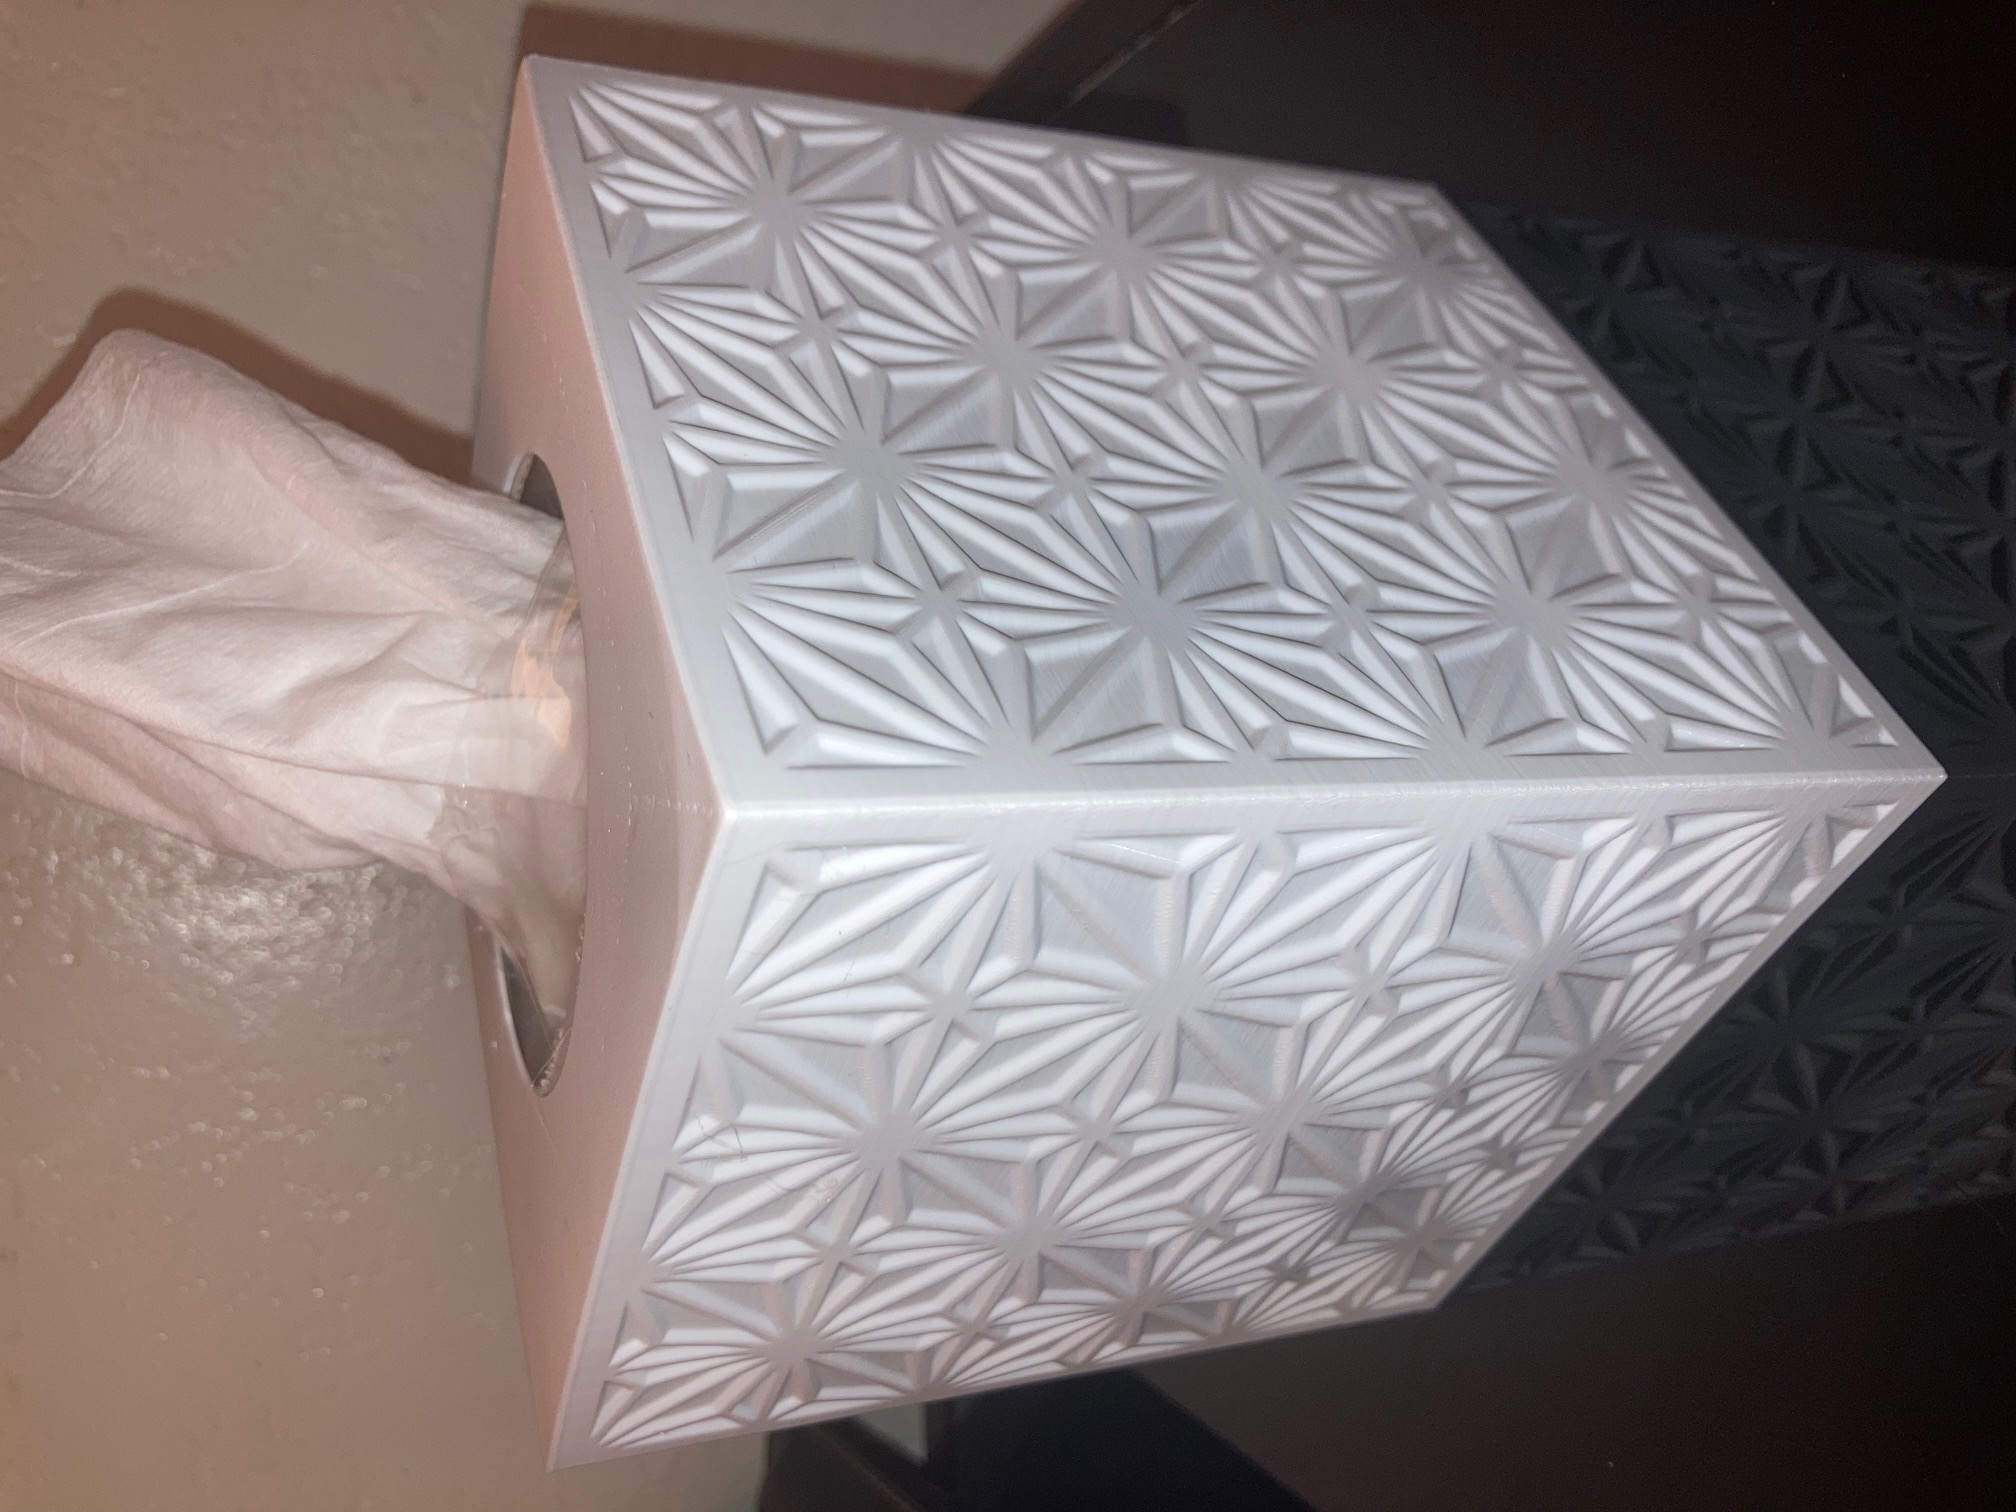 asanoha-kumiko-pattern-tissue-box-cover-by-spkealex89-download-free